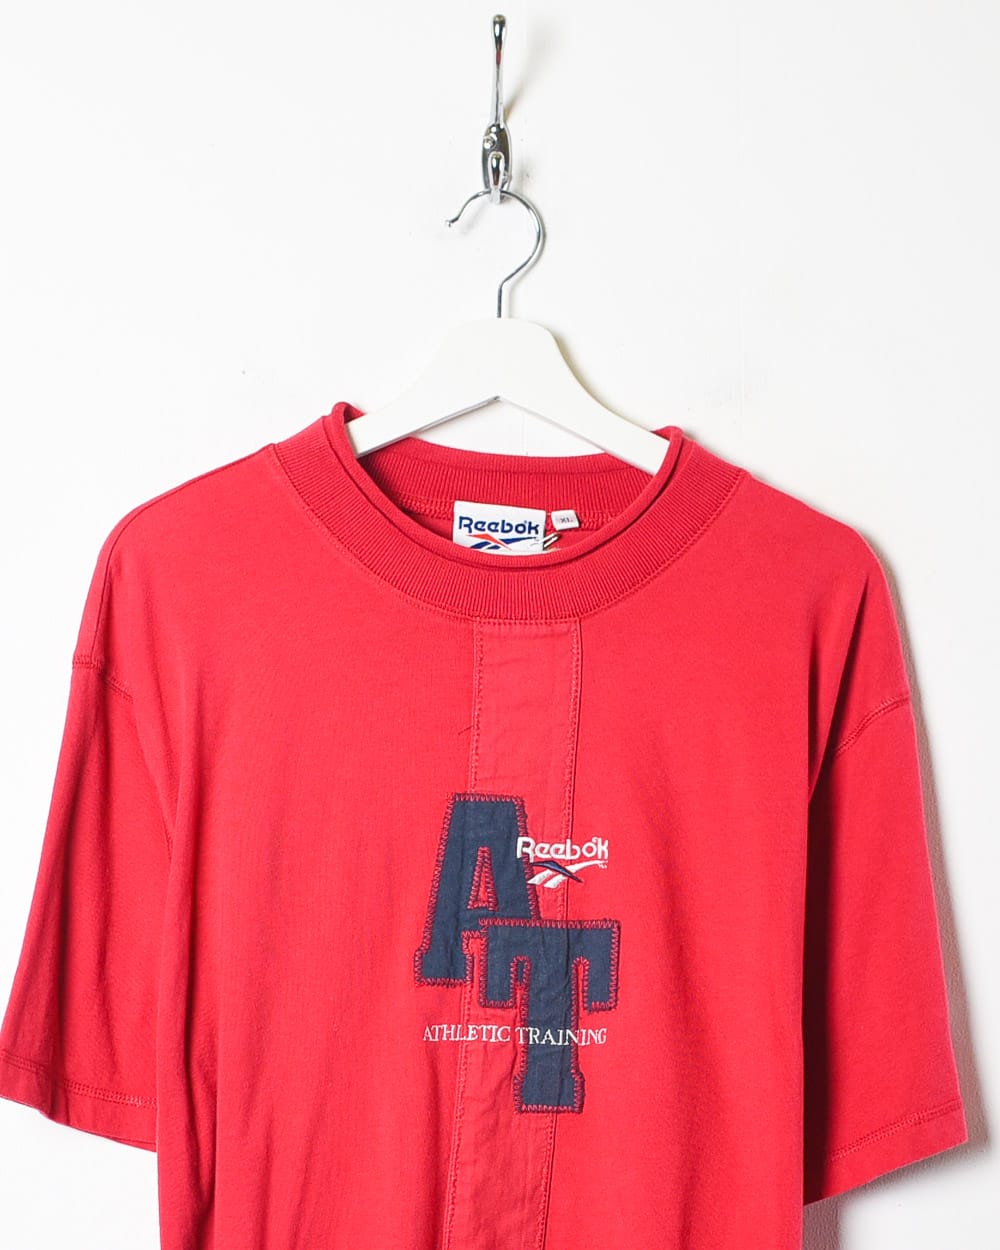 Red Reebok Athletic Training T-Shirt - X-Large